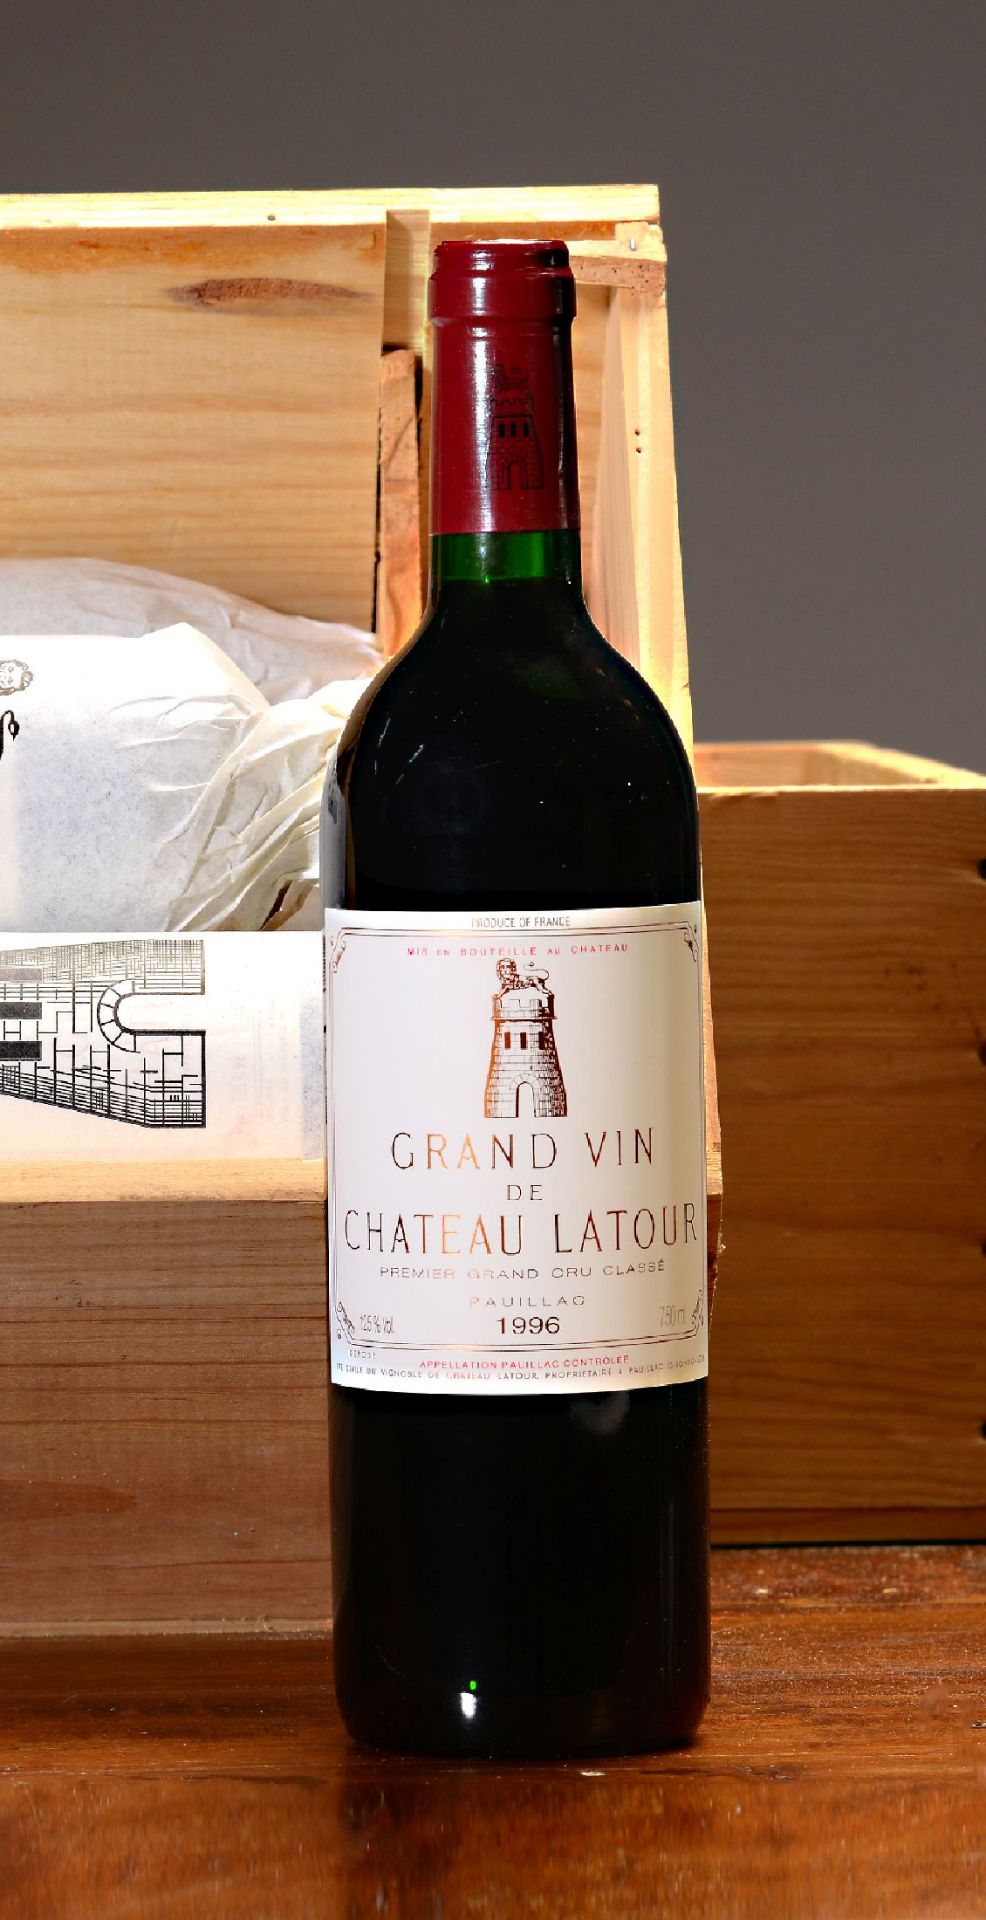 6 Flaschen 1996 Chateau Latour,  Paulliac, Premier grand - Bild 2 aus 2